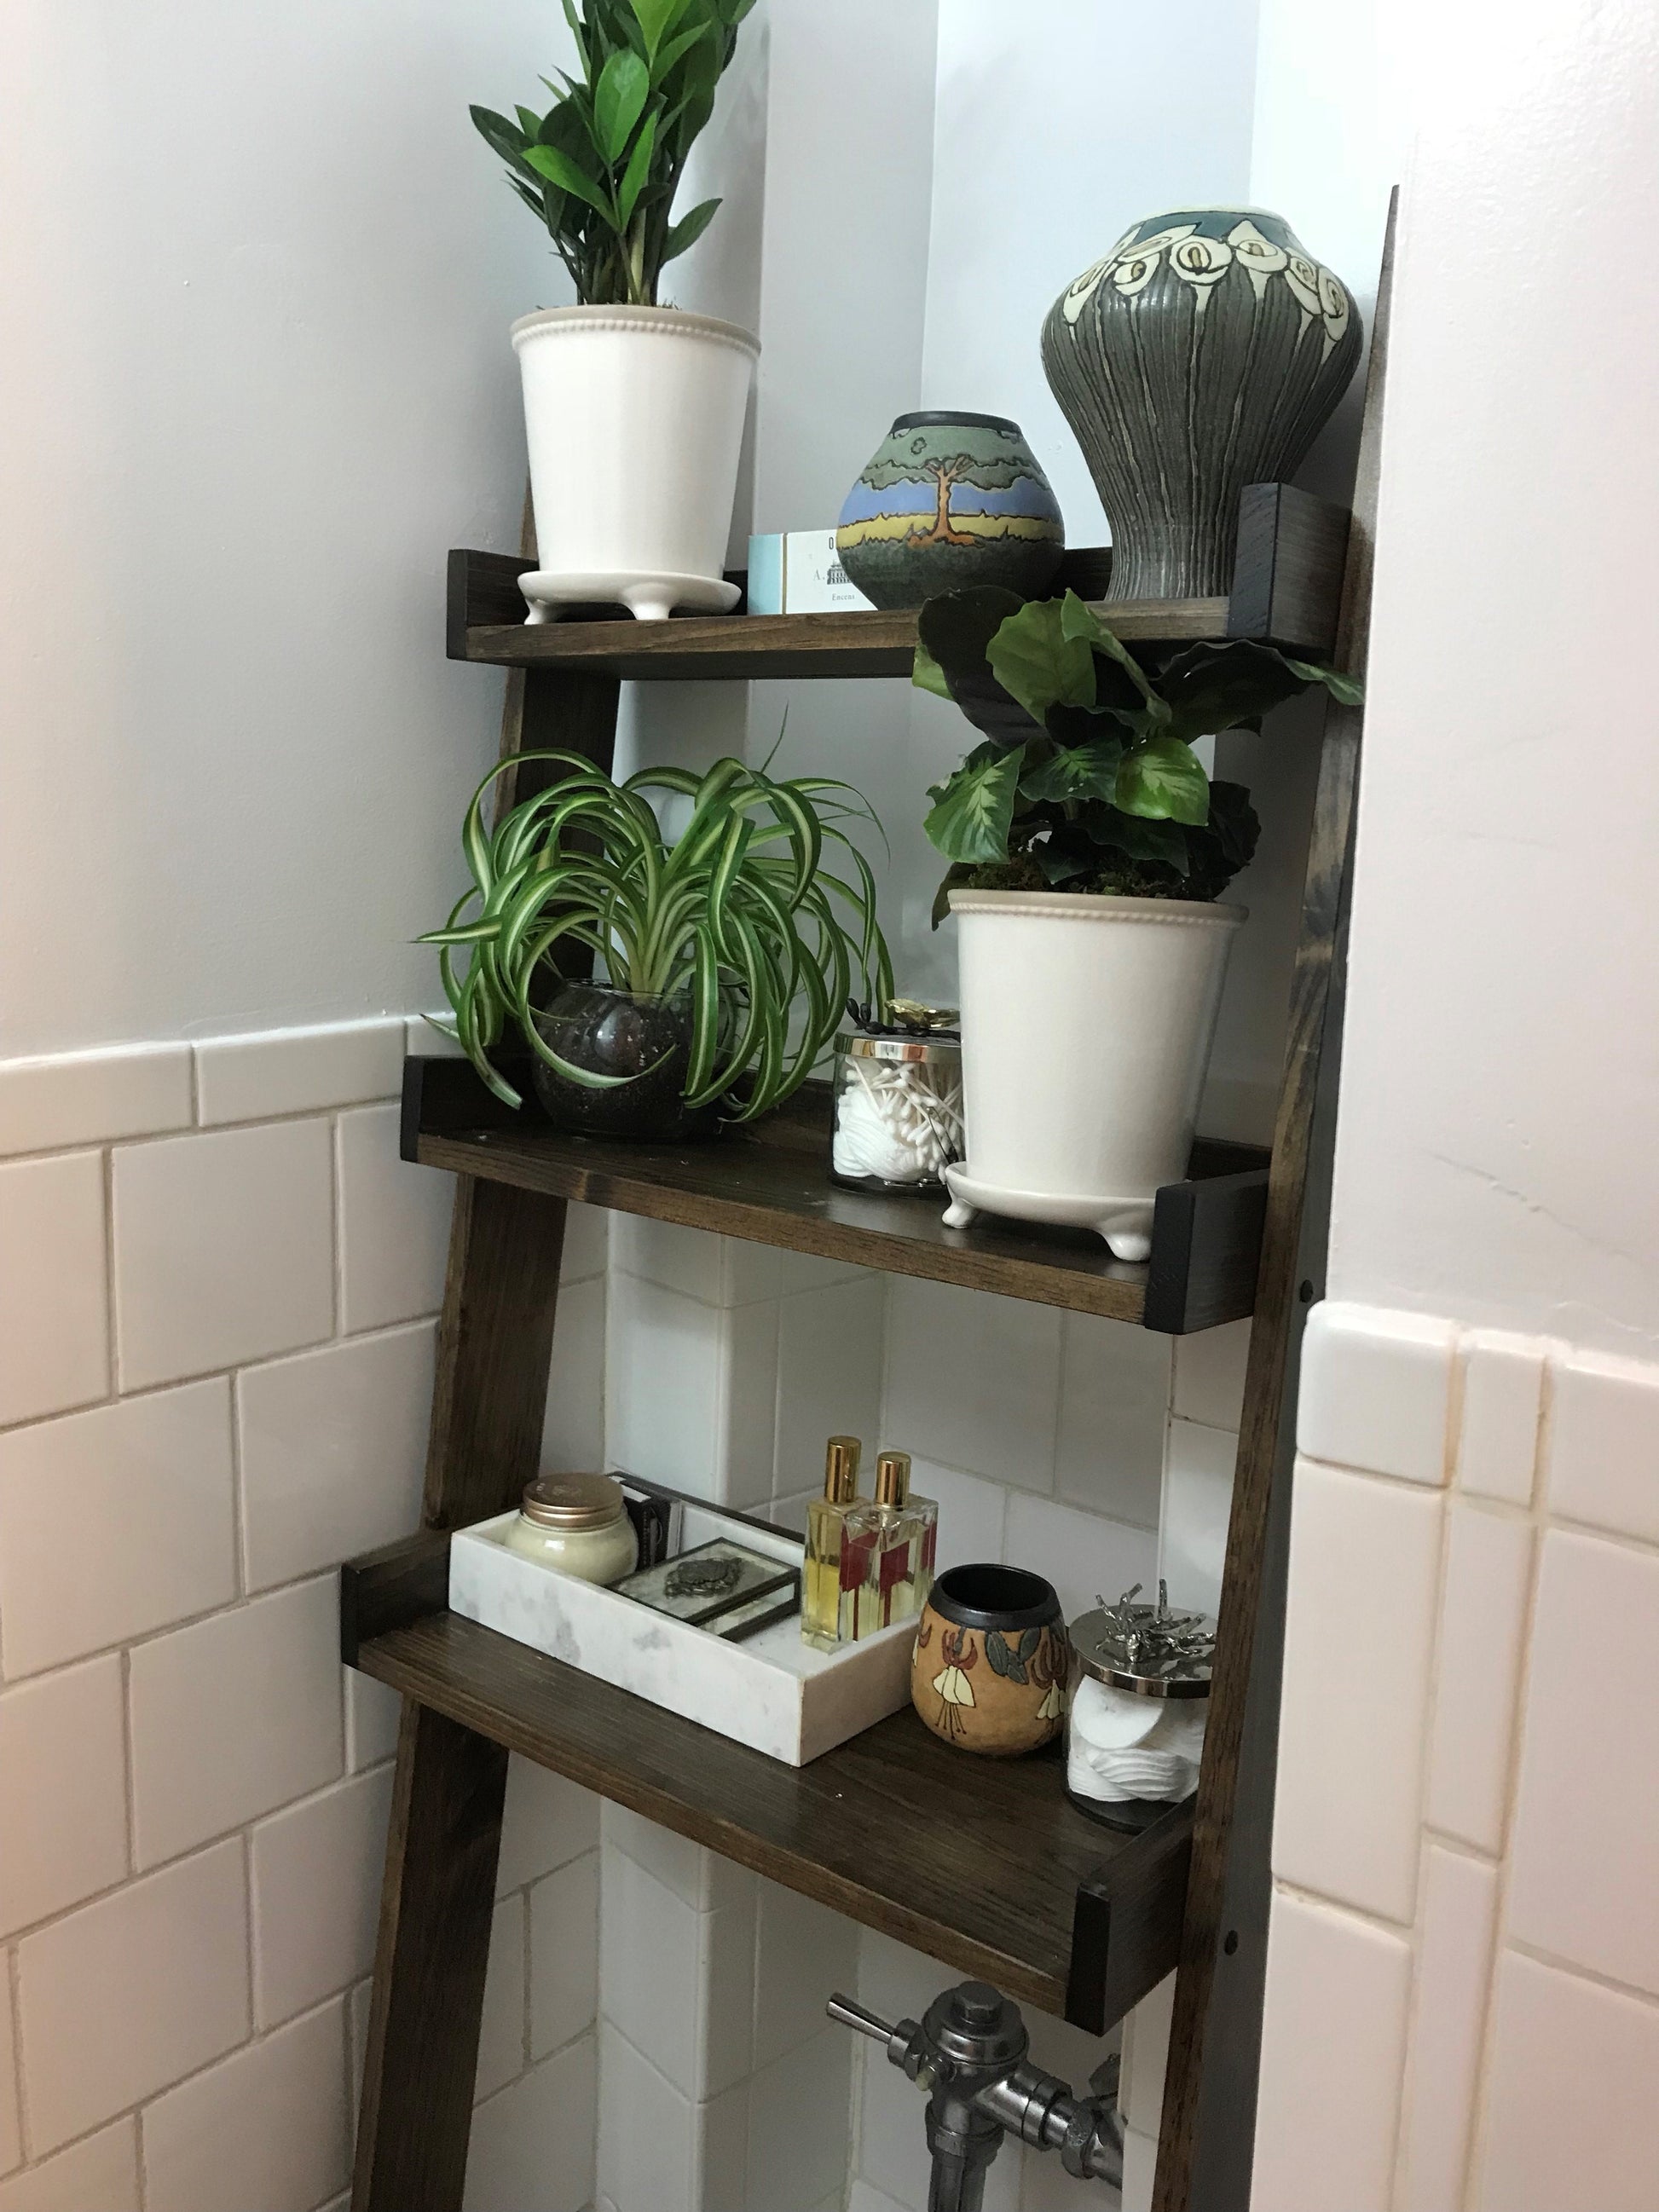 Walnut Over the Toilet Ladder Shelf, Wood Shelf, Bathroom Storage